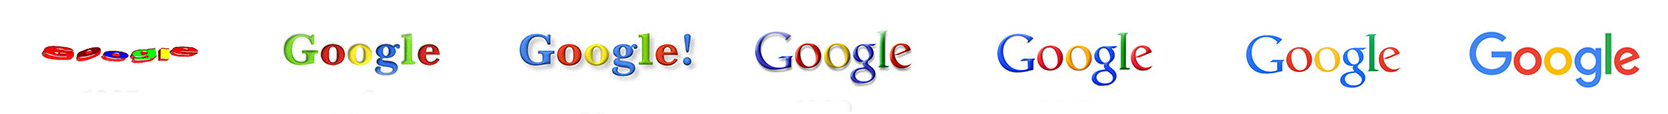 Google logo progress